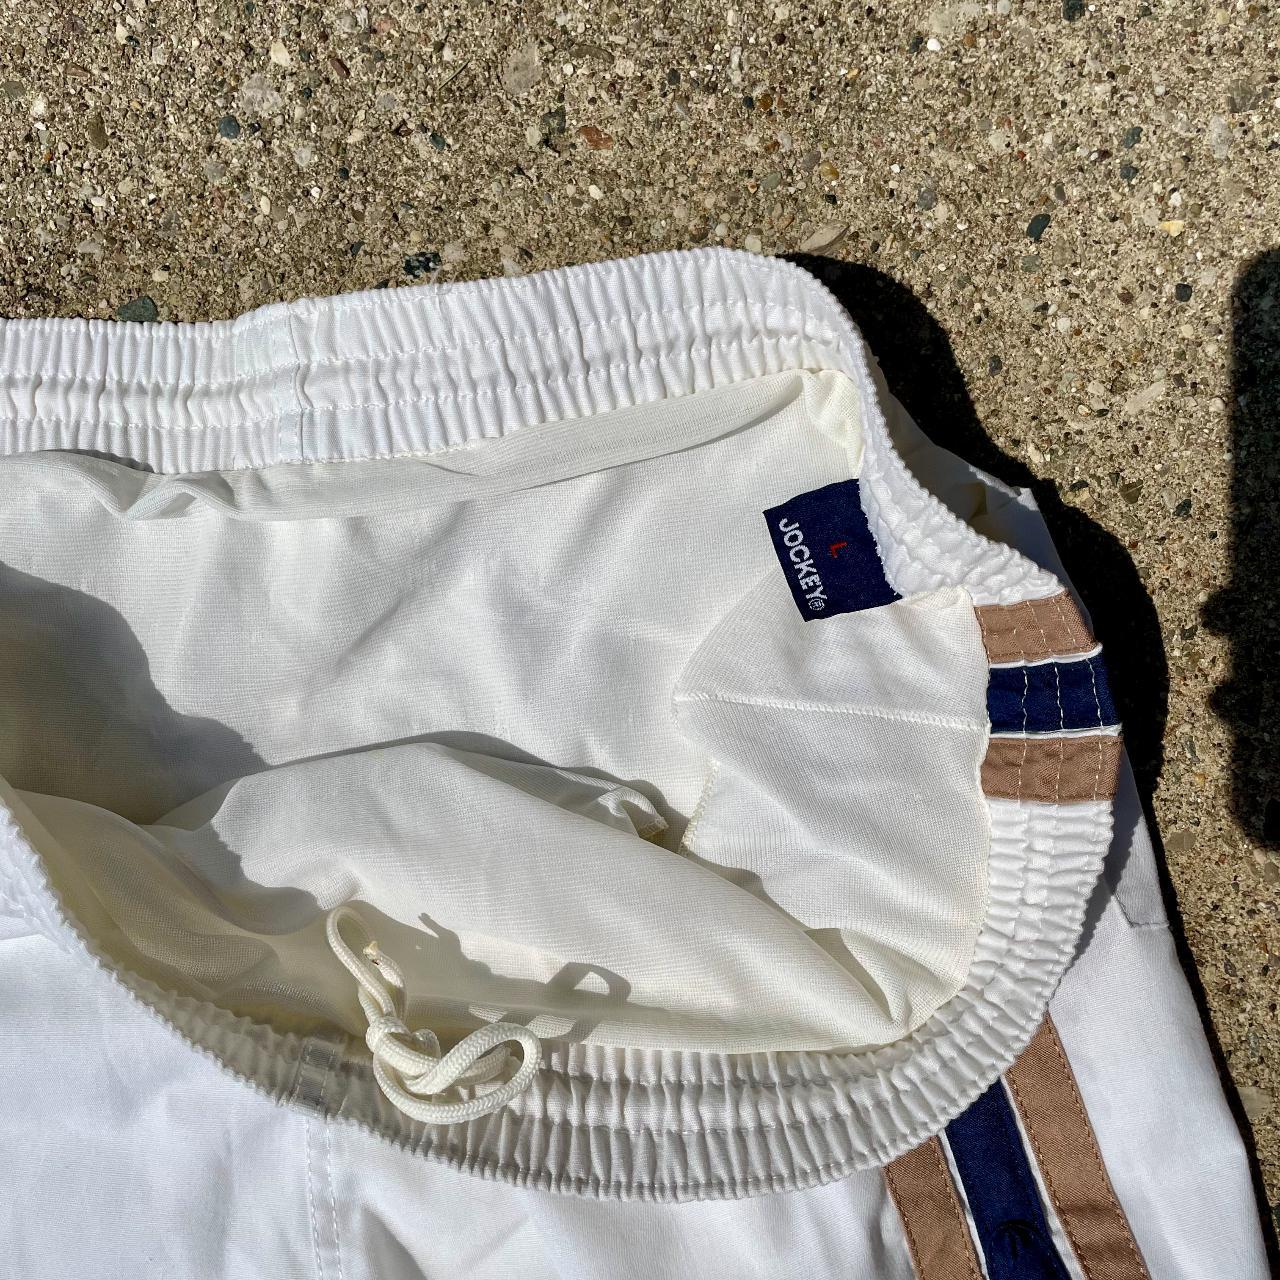 Jockey Men's White and Navy Shorts (3)